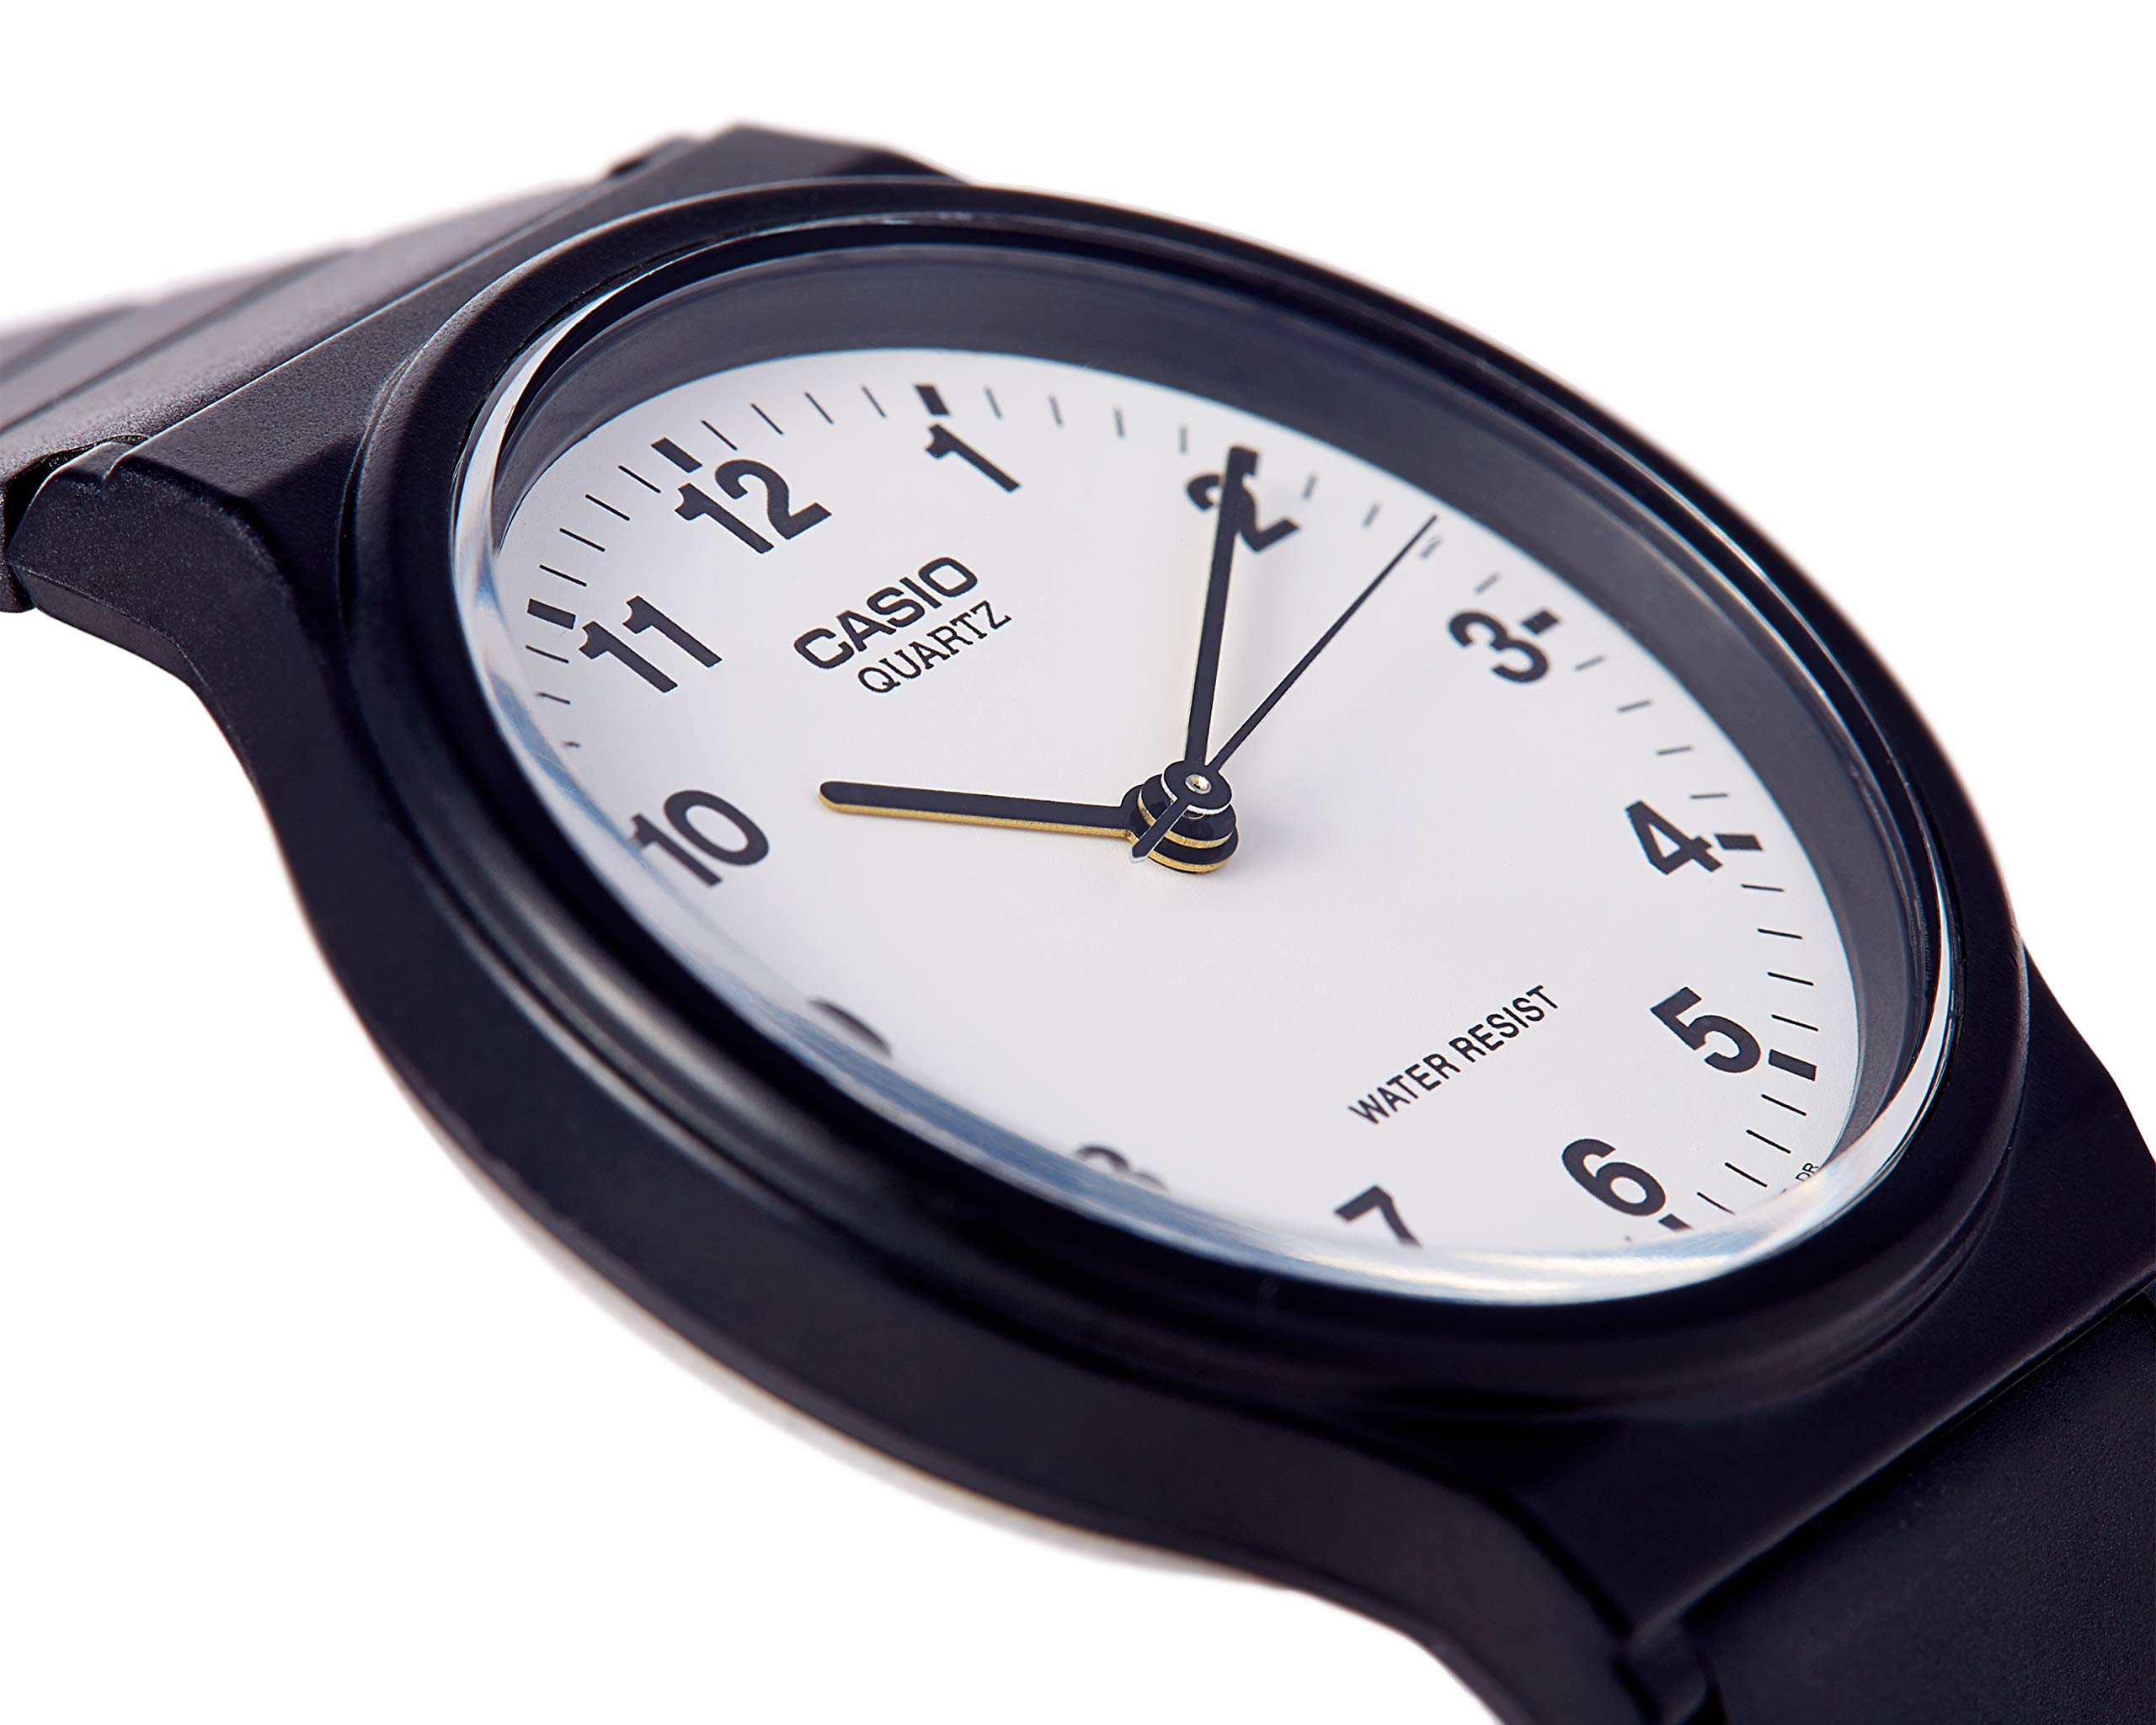 Casio Men's Quartz Resin Casual Watch, Color:Black (Model: MQ24-7B)